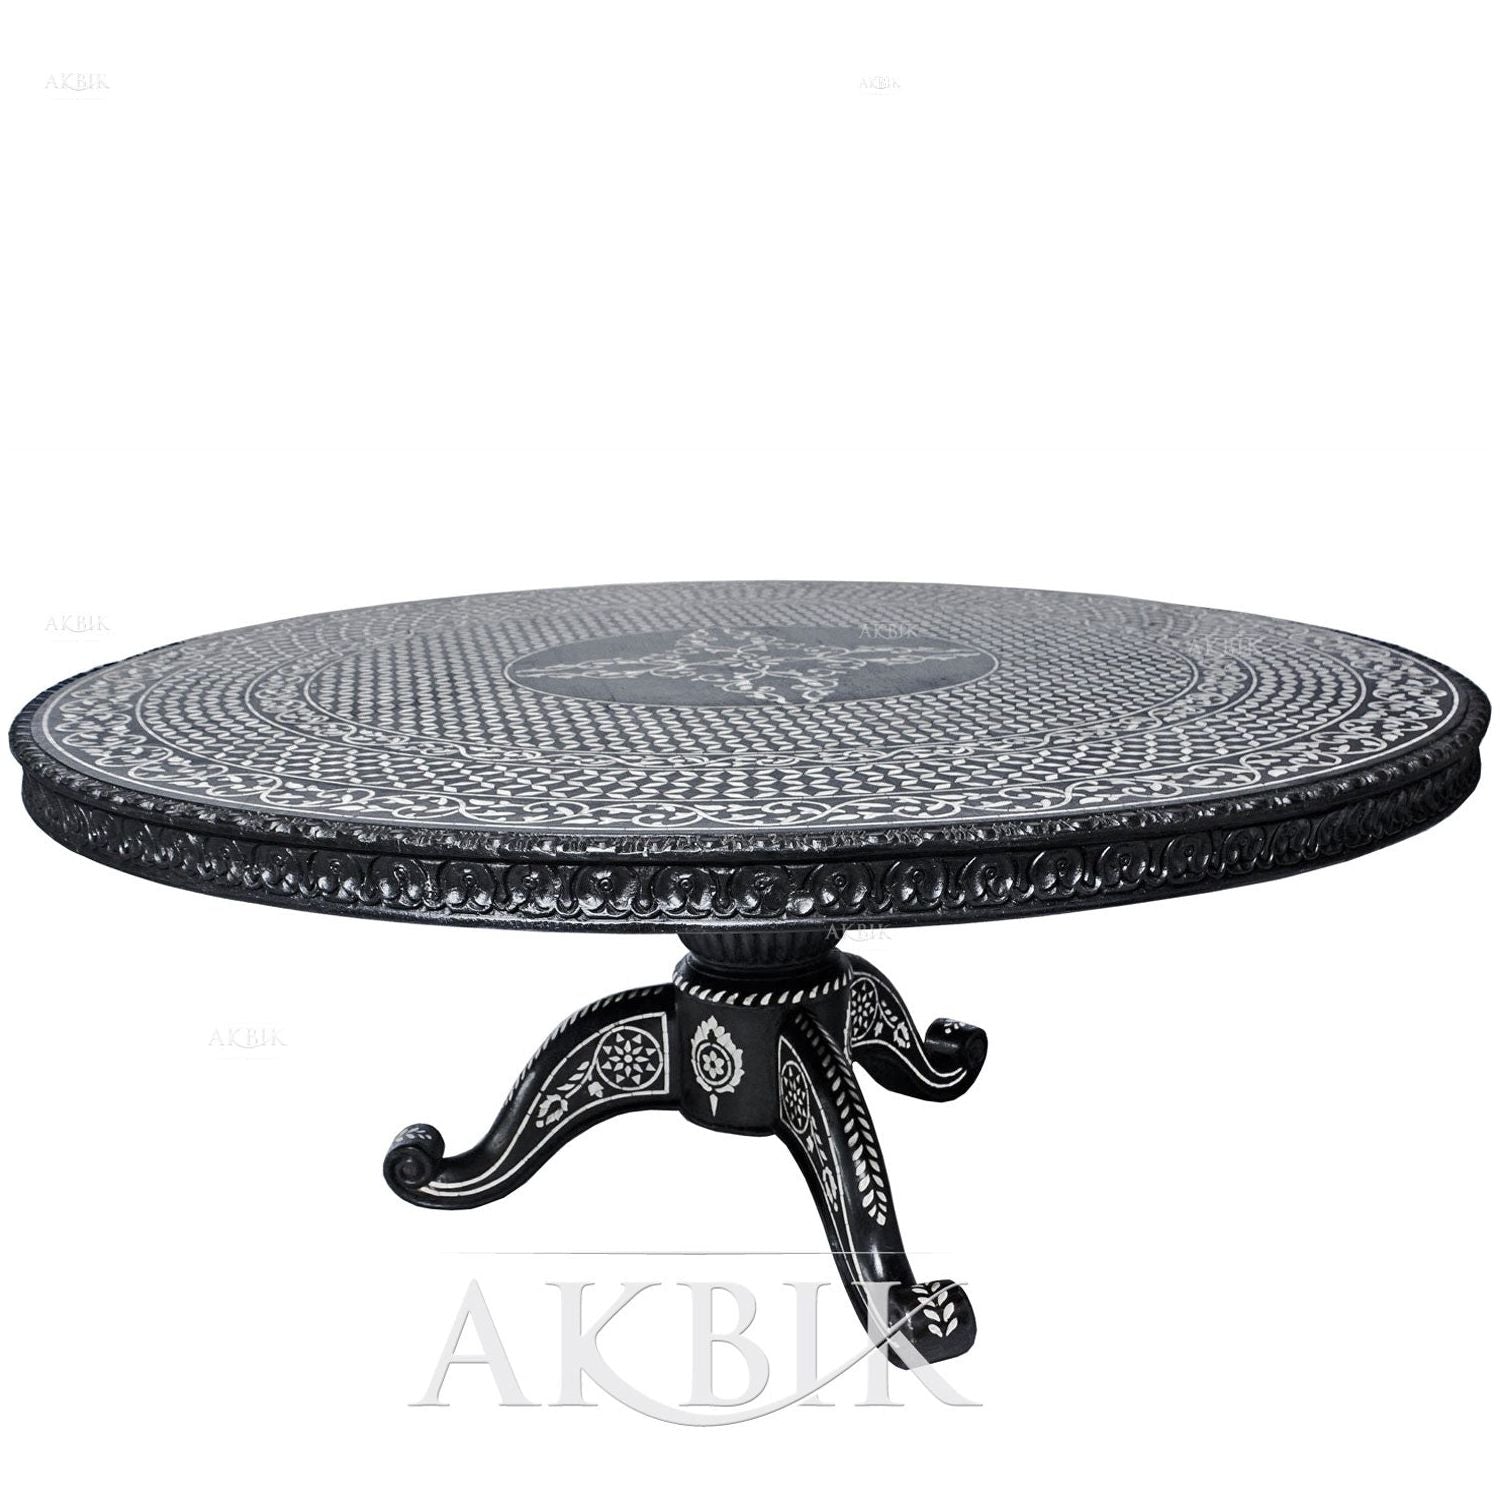 MILKY WAY DINING TABLE - AKBIK Furniture & Design